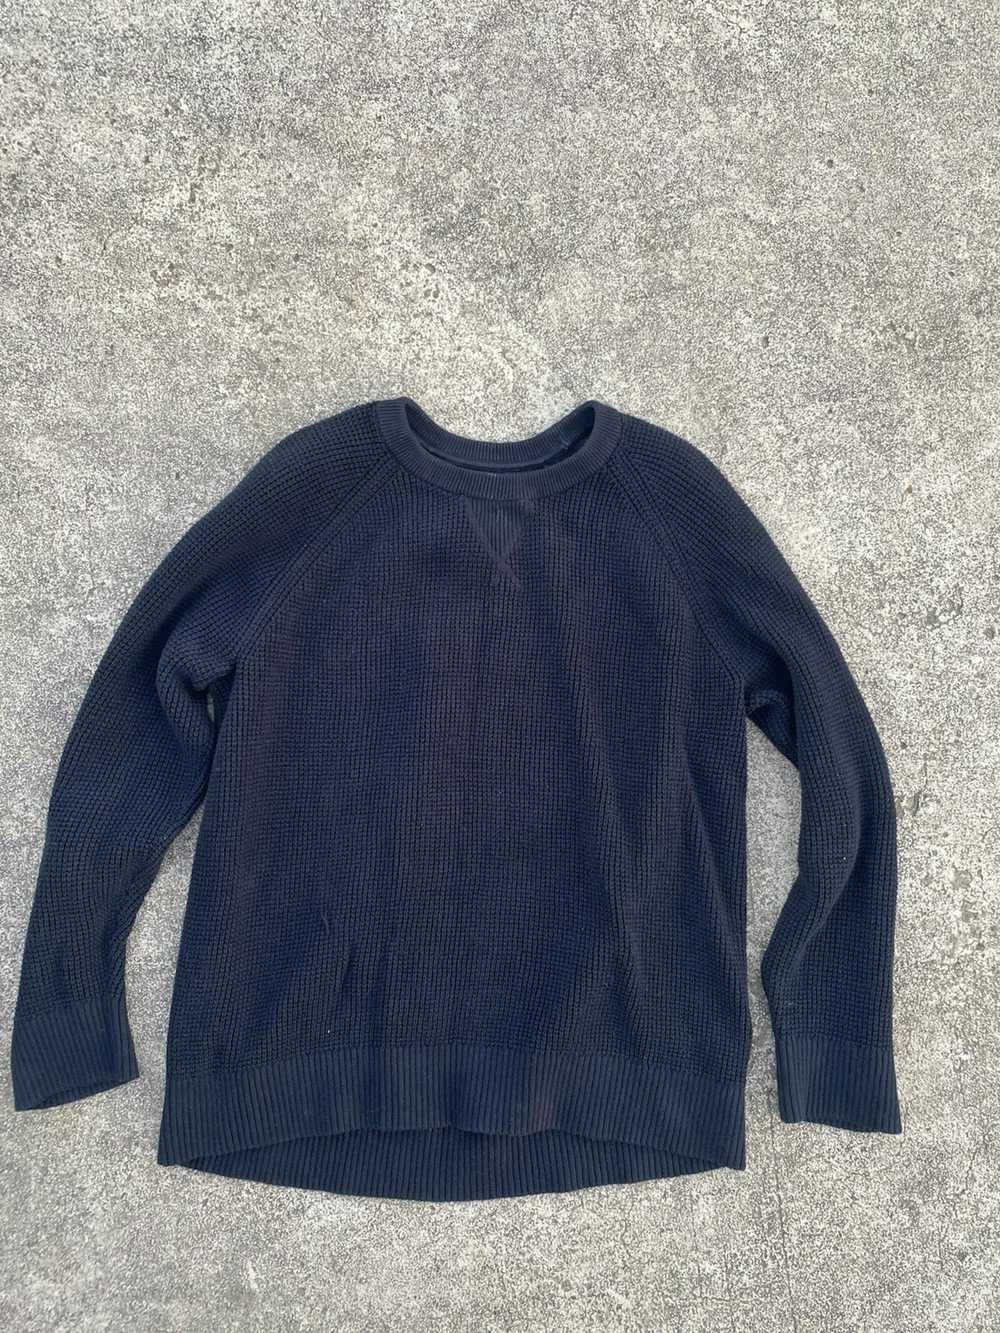 Gap Black Knit Sweater - image 1